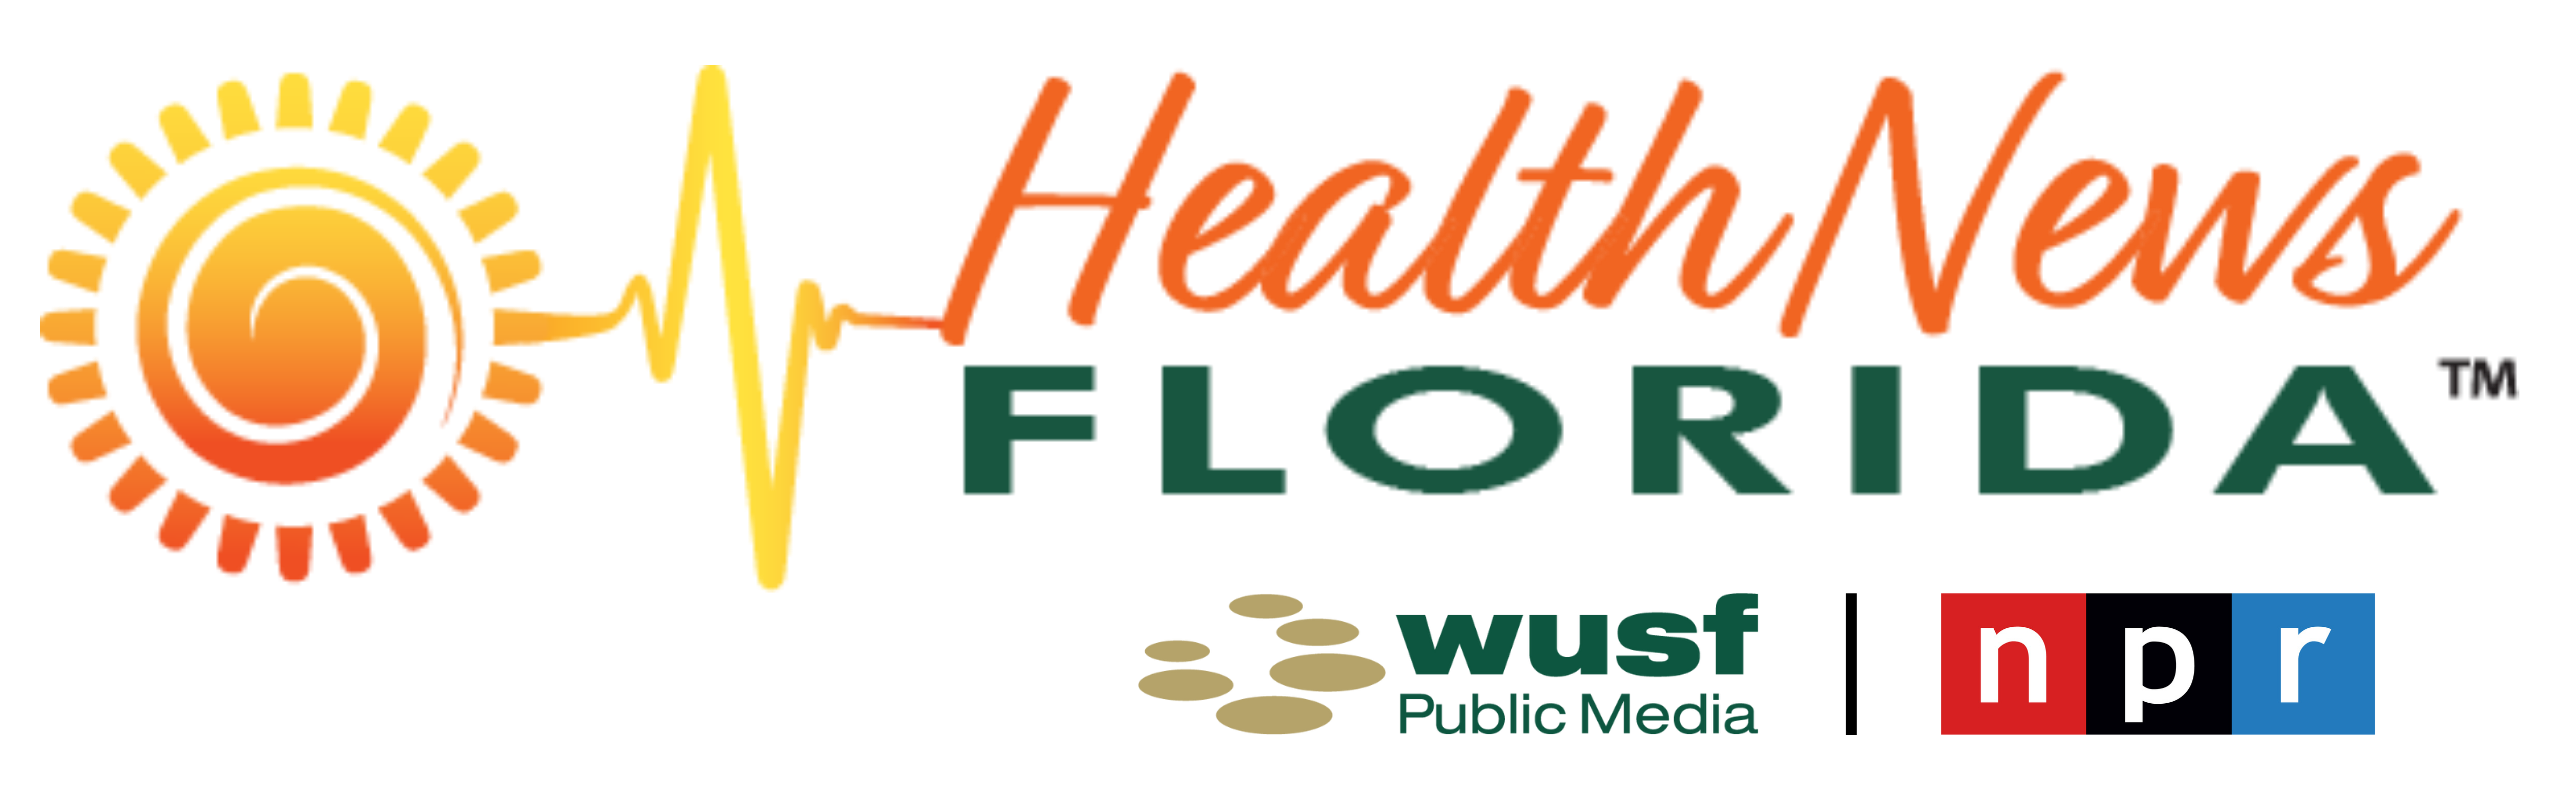 WUSF NPR Health News Florida Logos